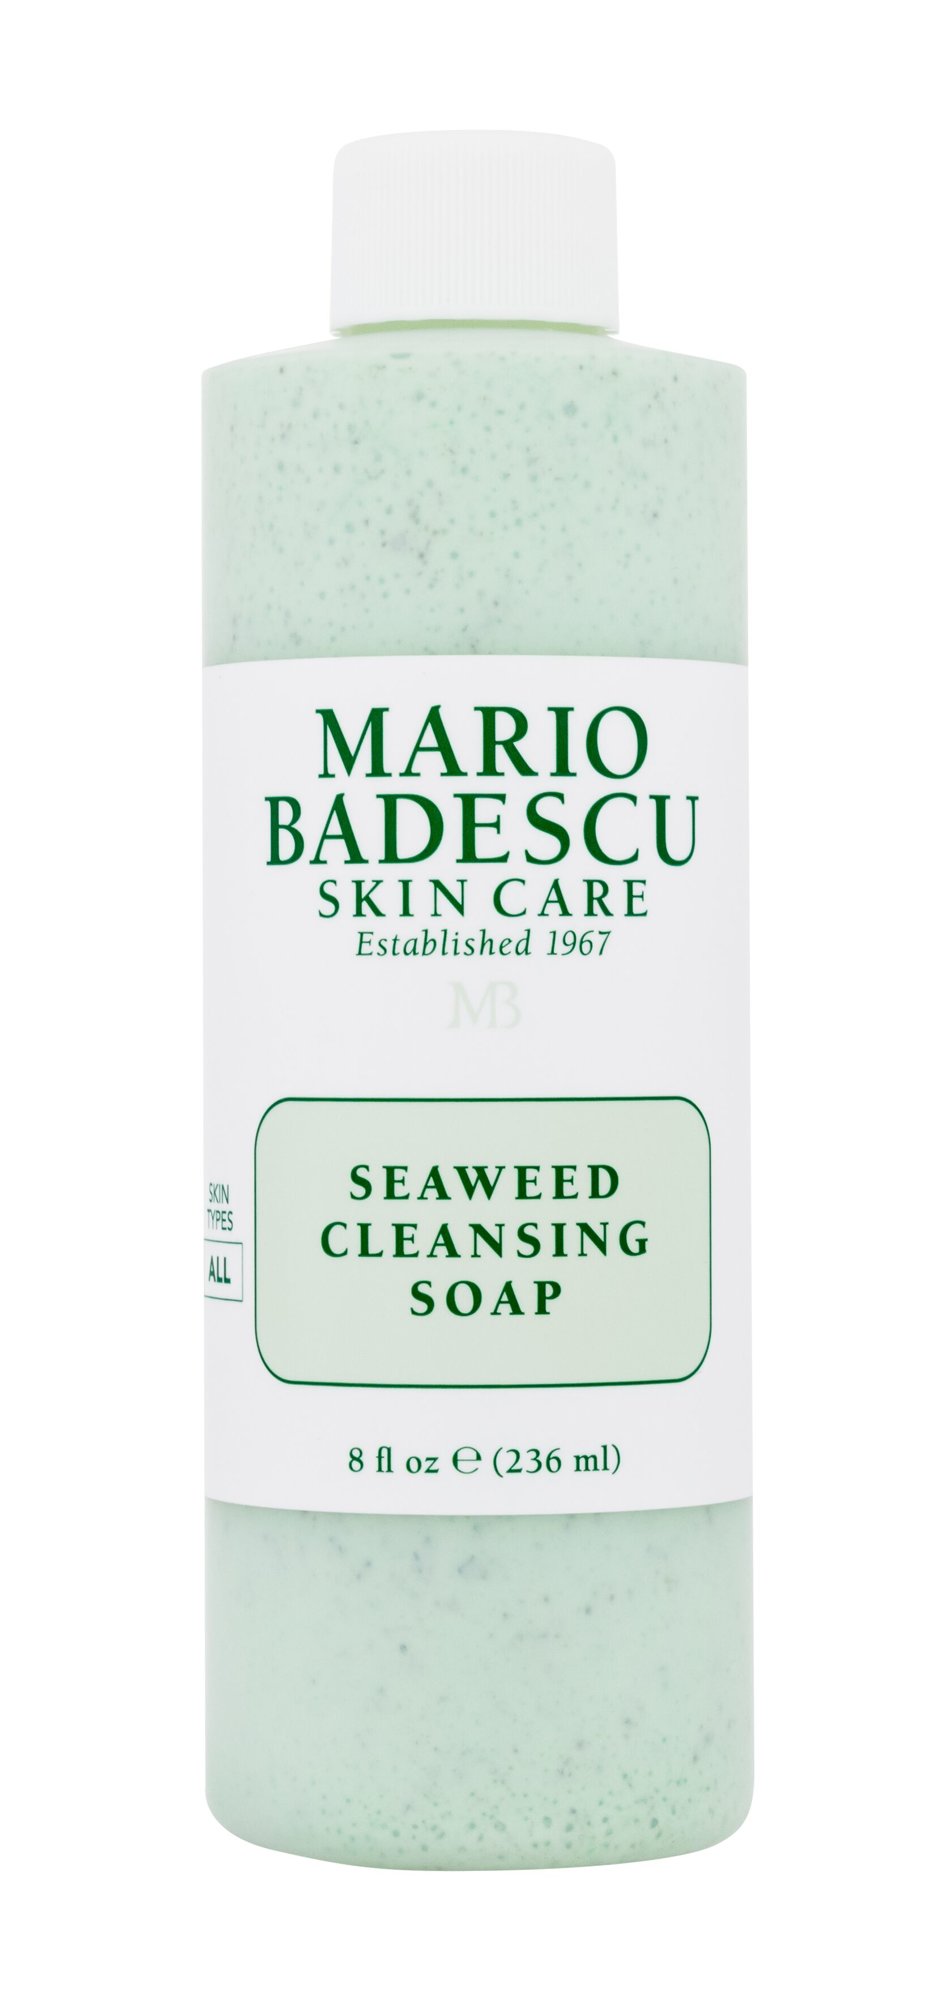 Mario Badescu Seaweed Cleansing Soap veido muilas